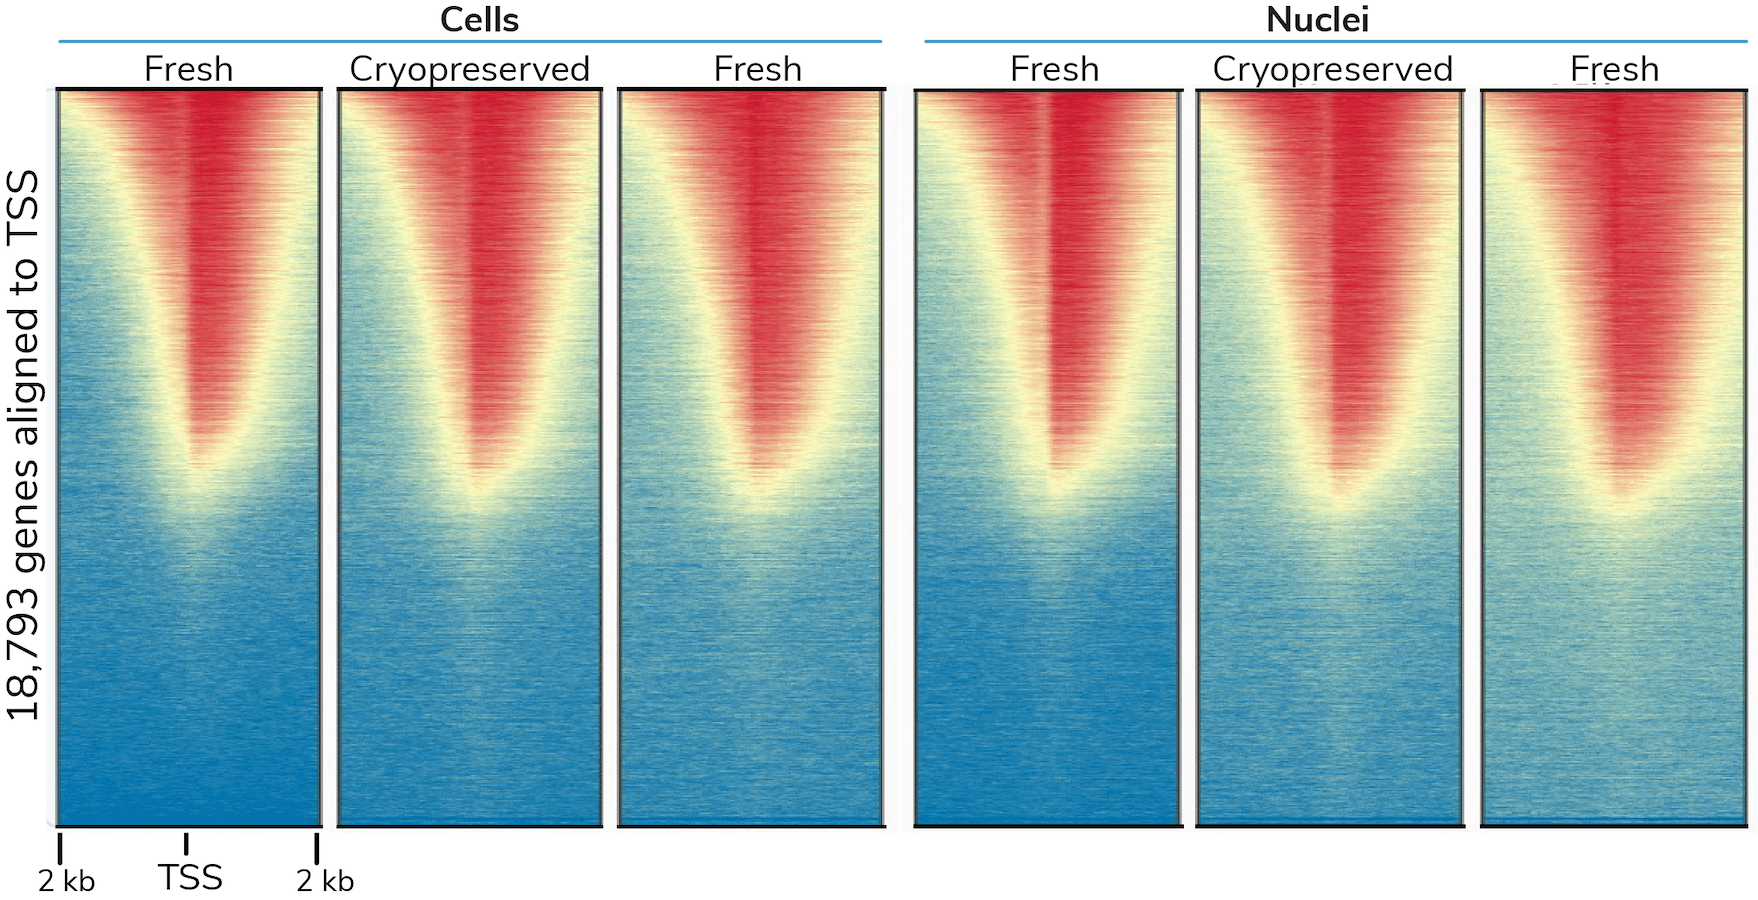 cutandrun-cells-and-nuclei